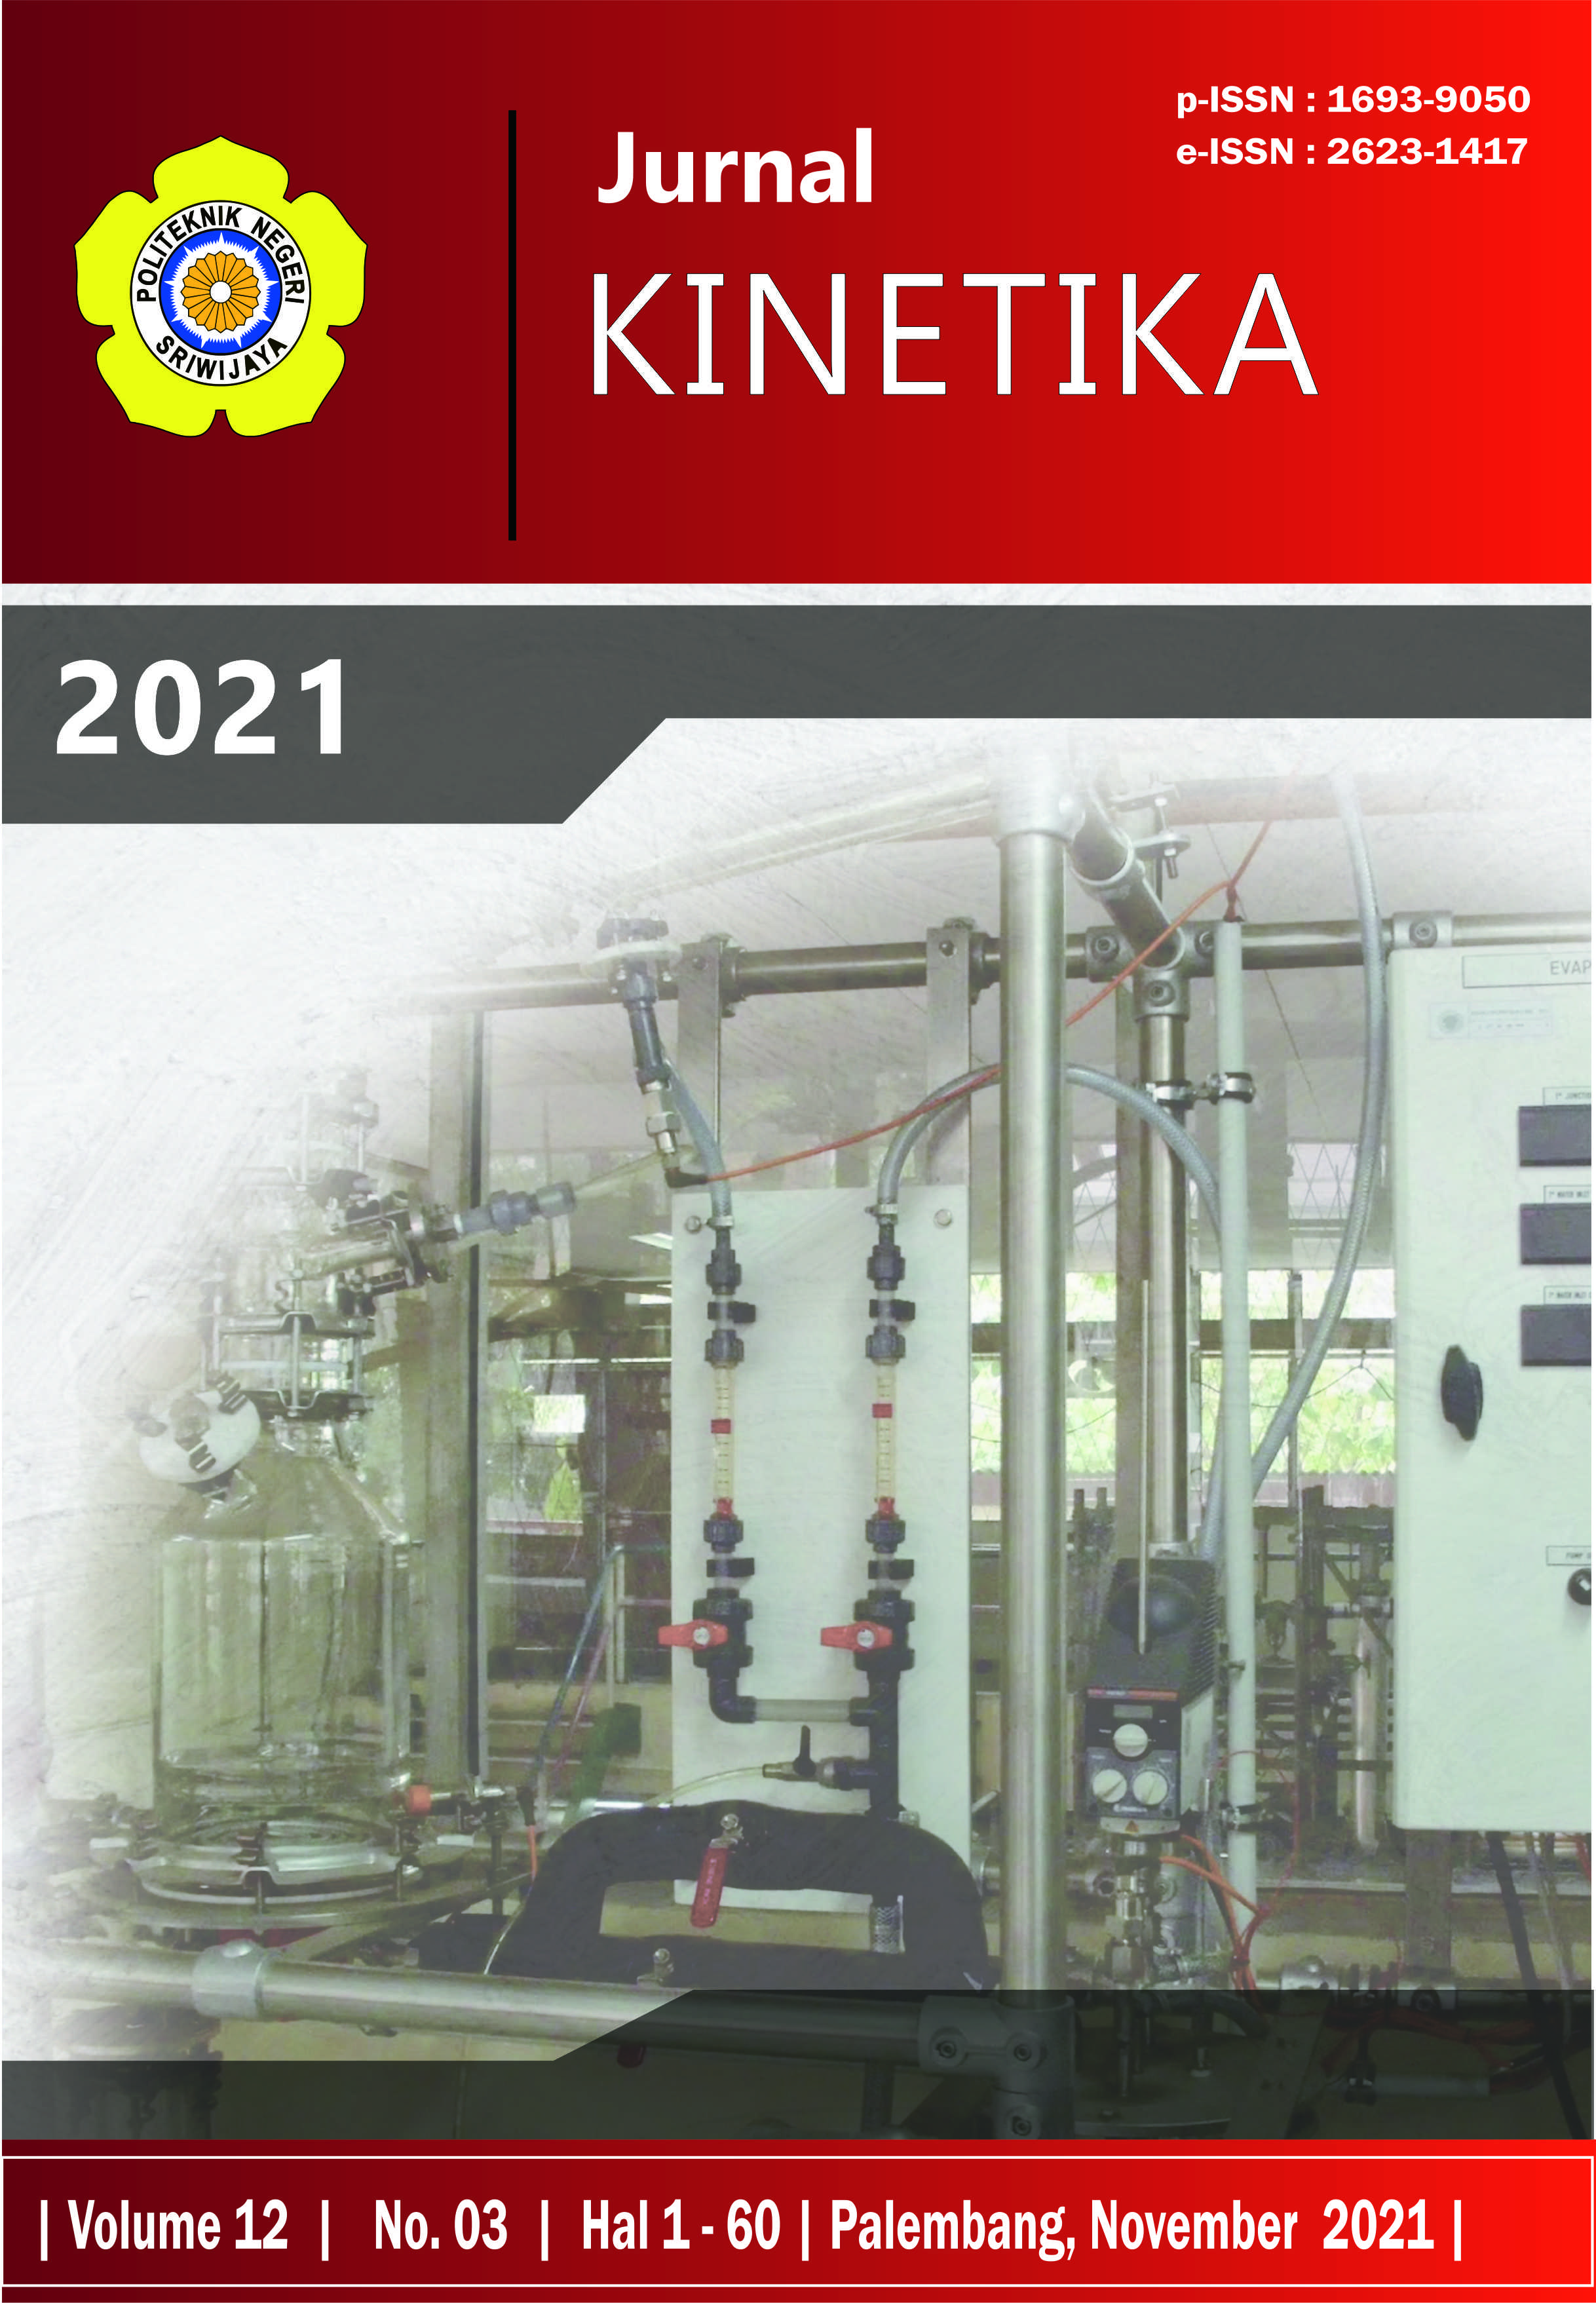 					View Vol. 12 No. 3 (2021): KINETIKA 01112021
				